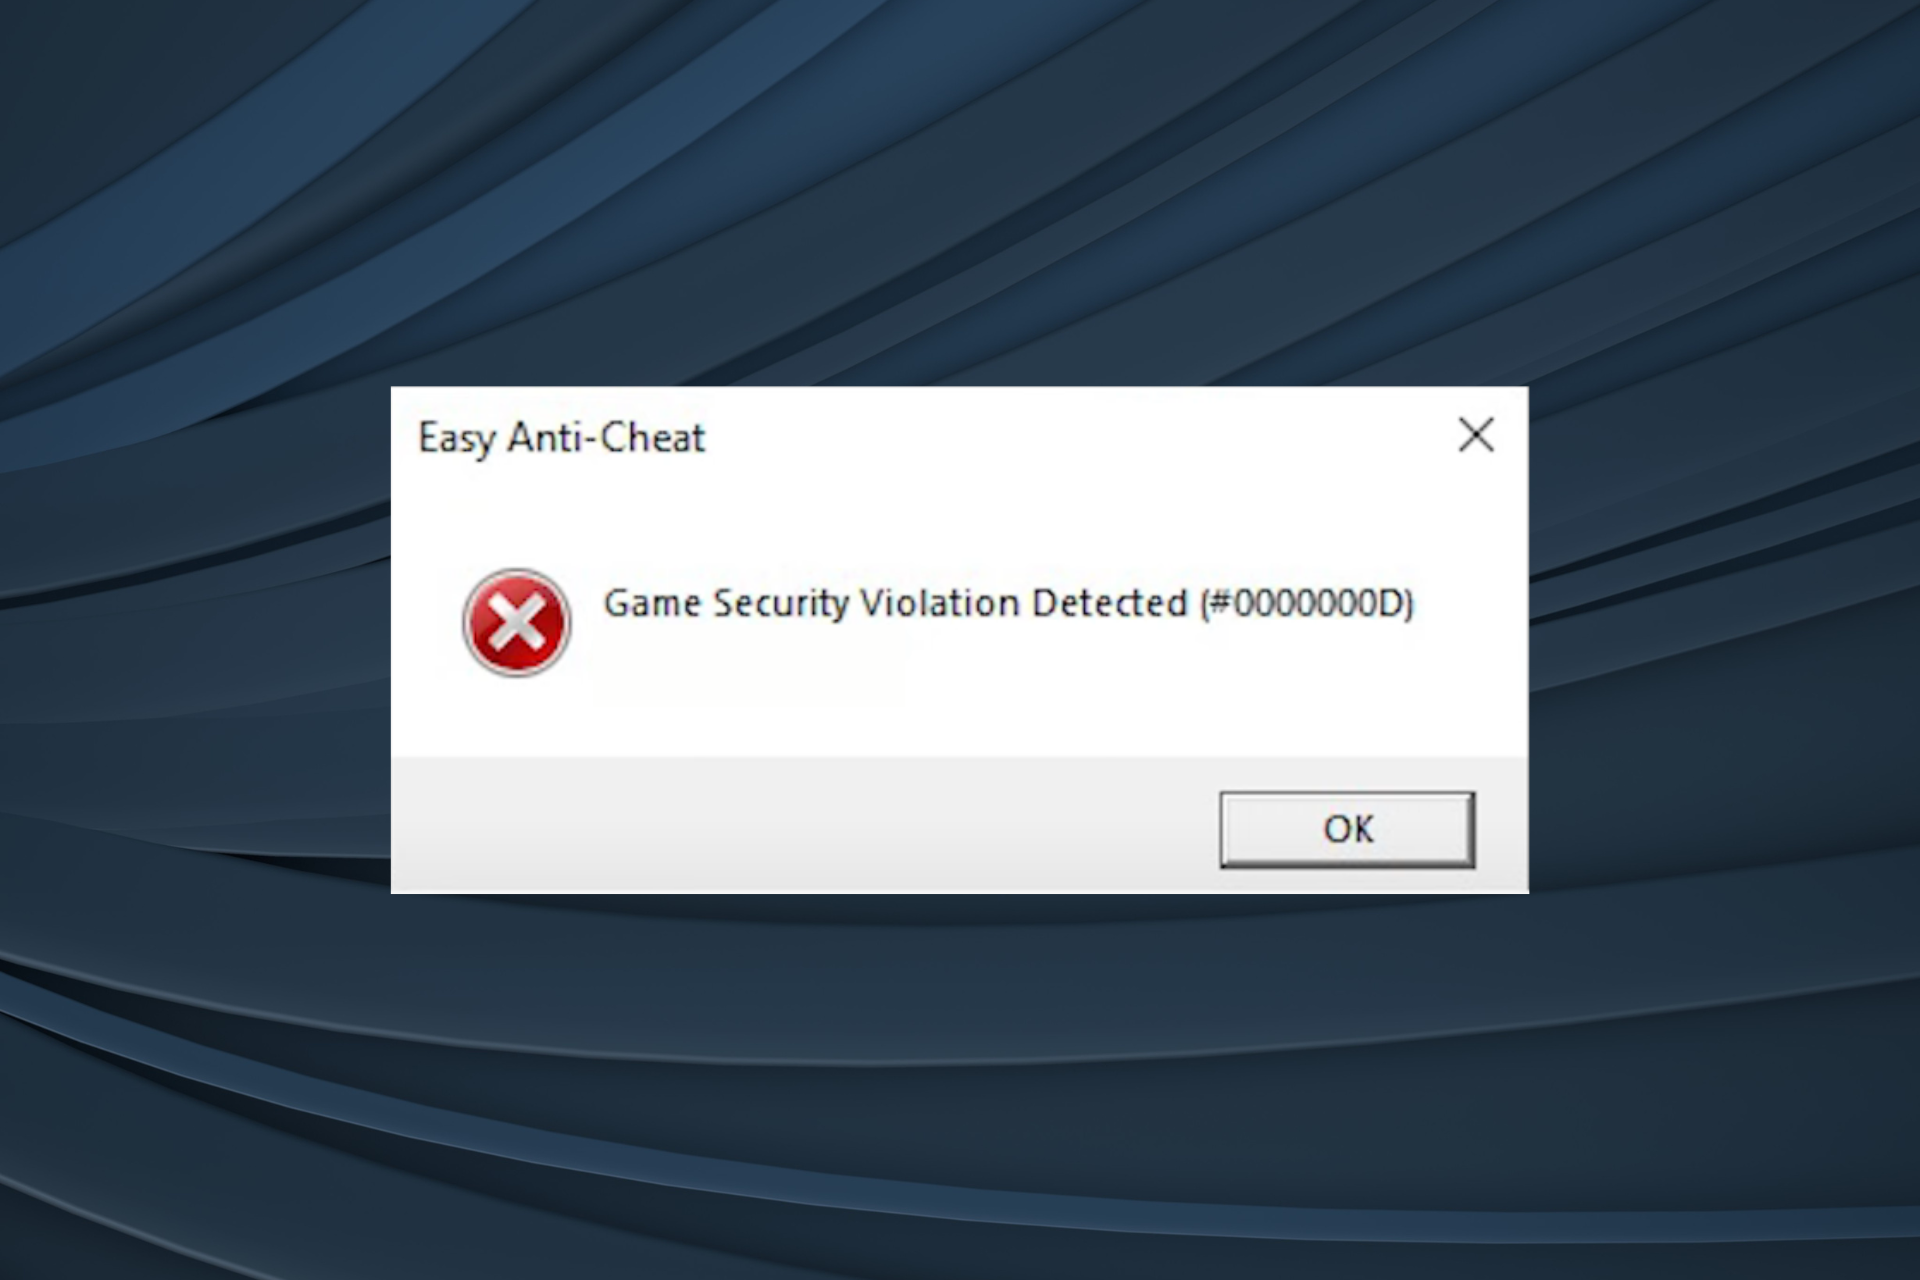 Fix game security violation detected in Apex Legends